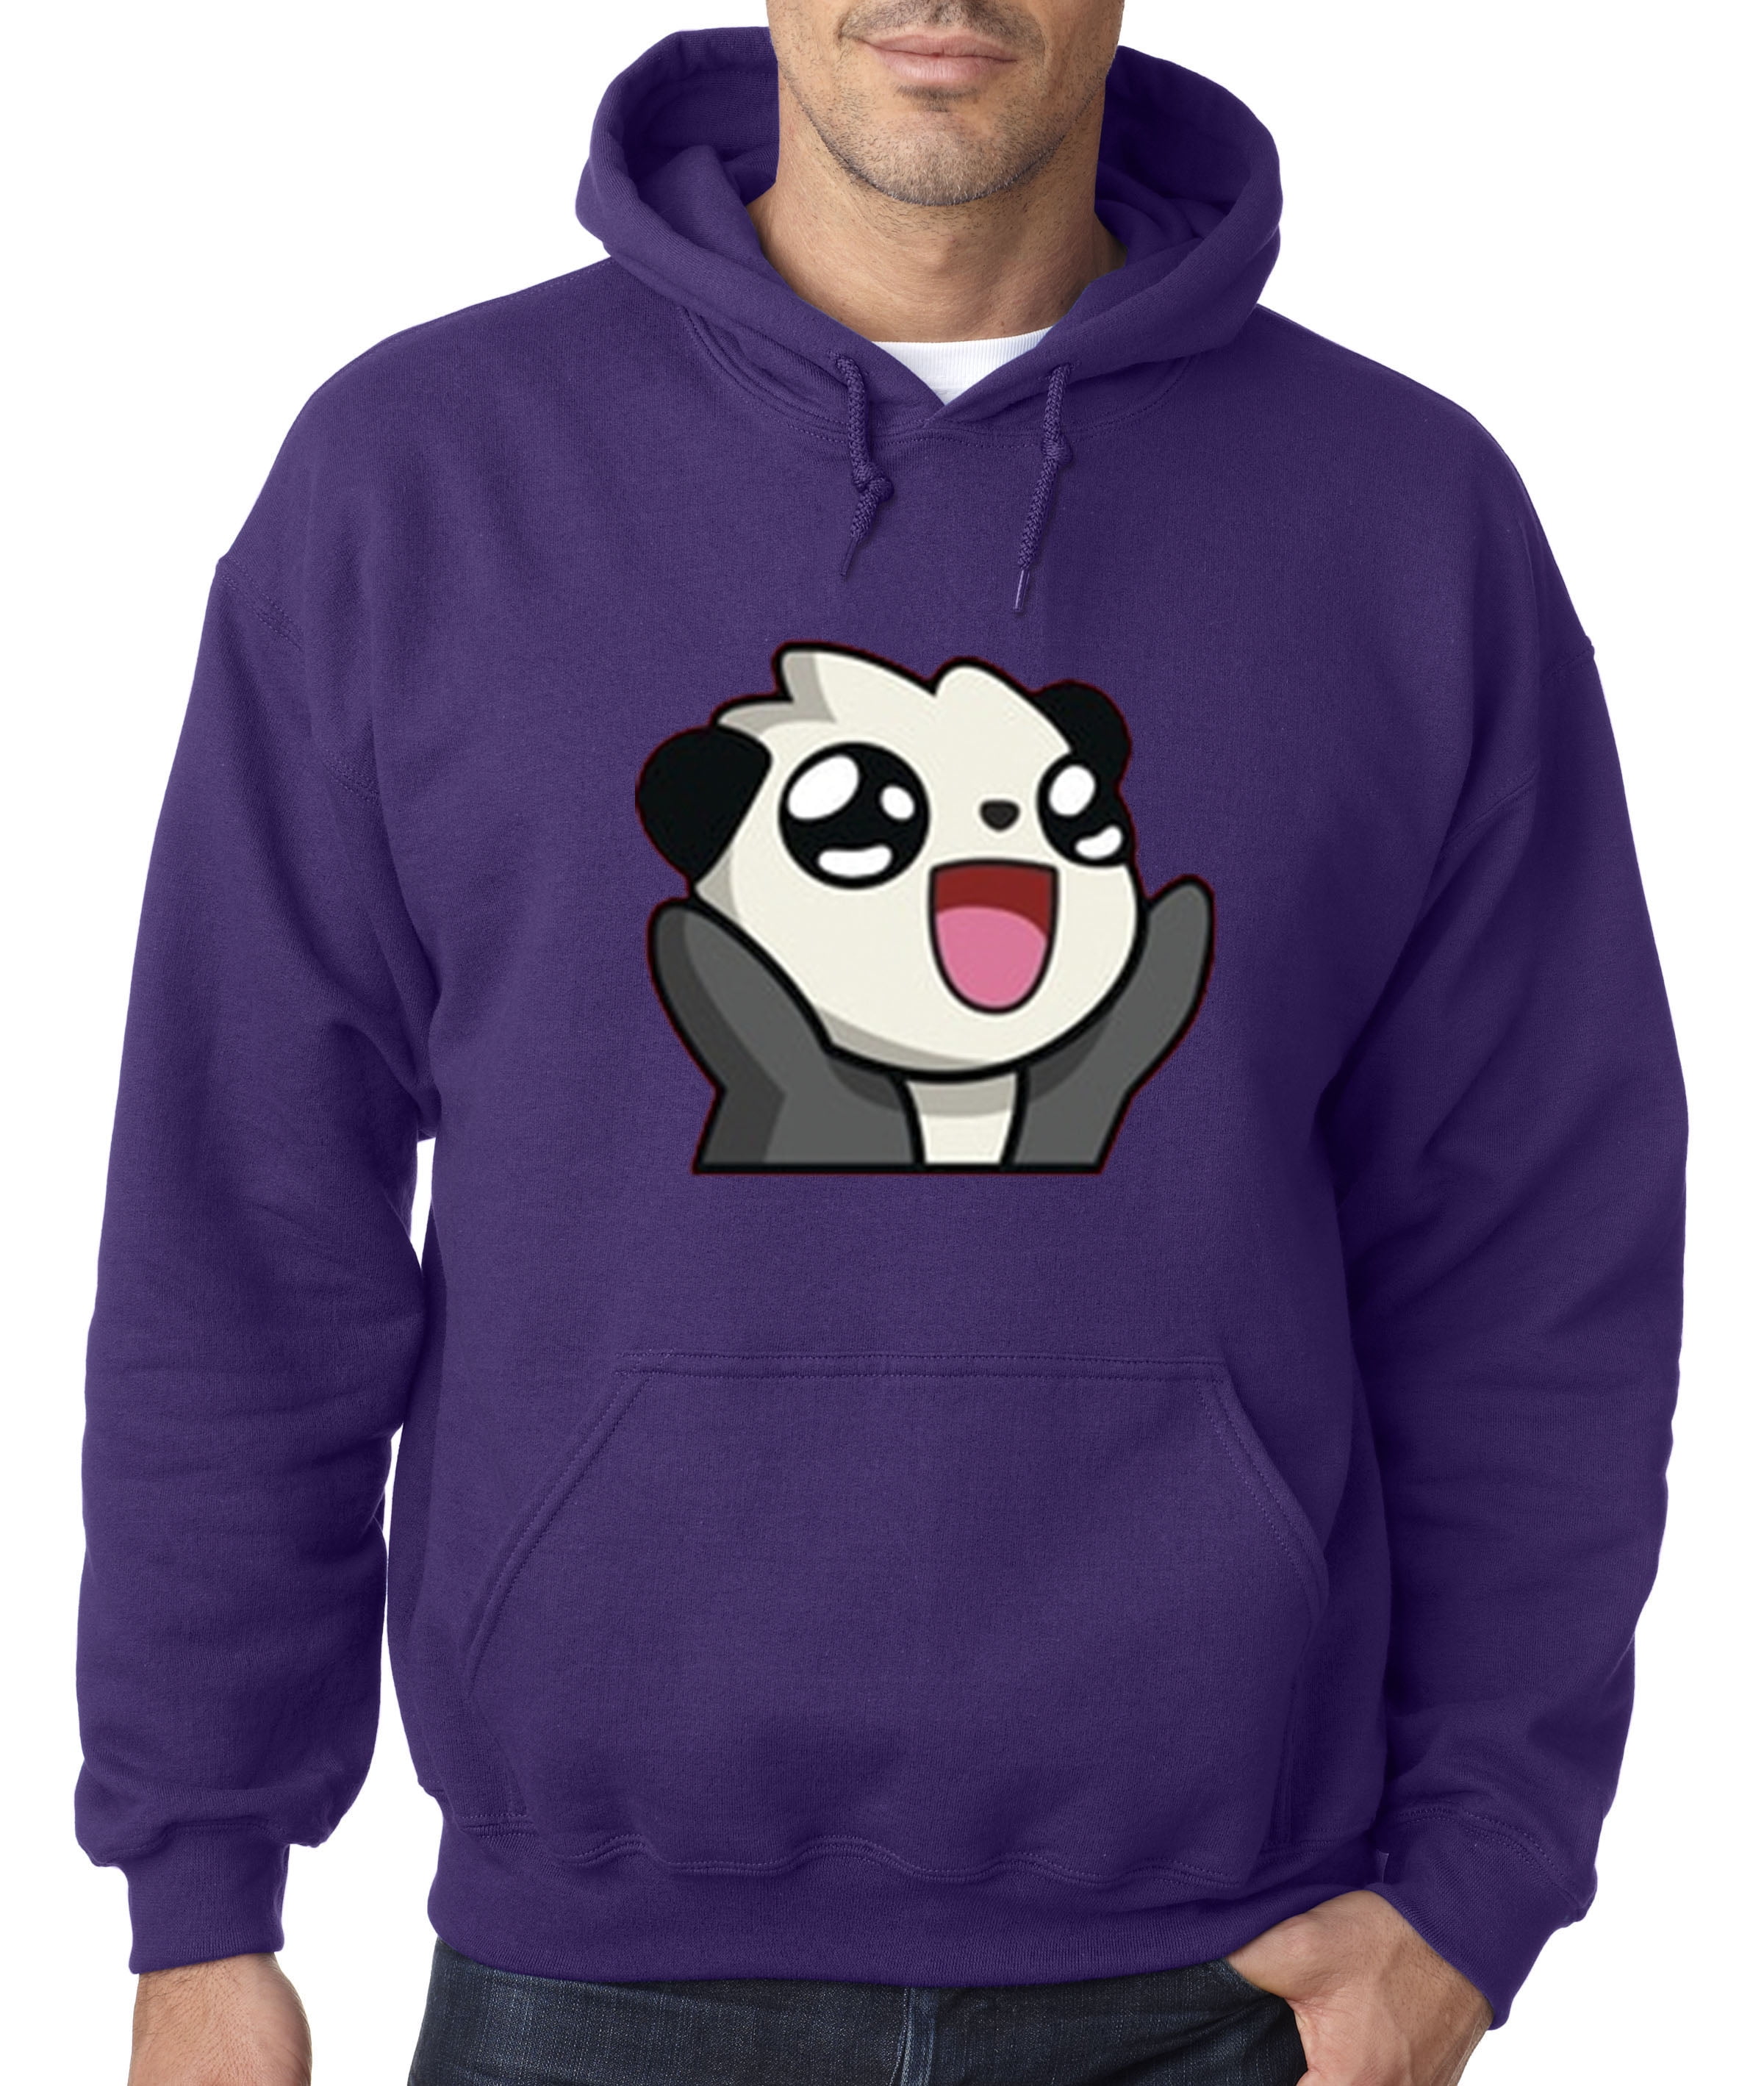 Download New Way - 622 - Hoodie Anime Panda Cute Cartoon Character Sweatshirt - Walmart.com - Walmart.com